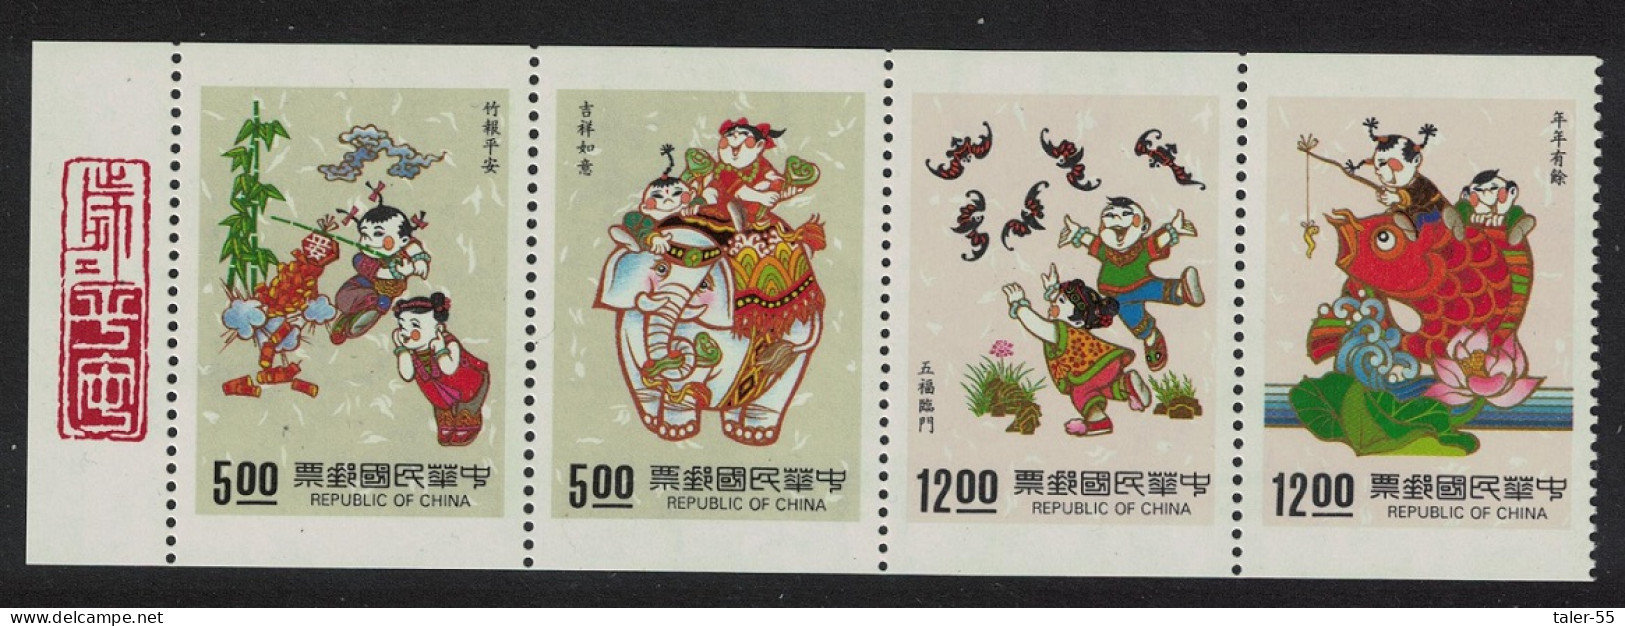 Taiwan Greetings Stamps 4v Booklet Pane 1992 MNH SG#2034-2037 MI#2024C-2027C - Nuevos